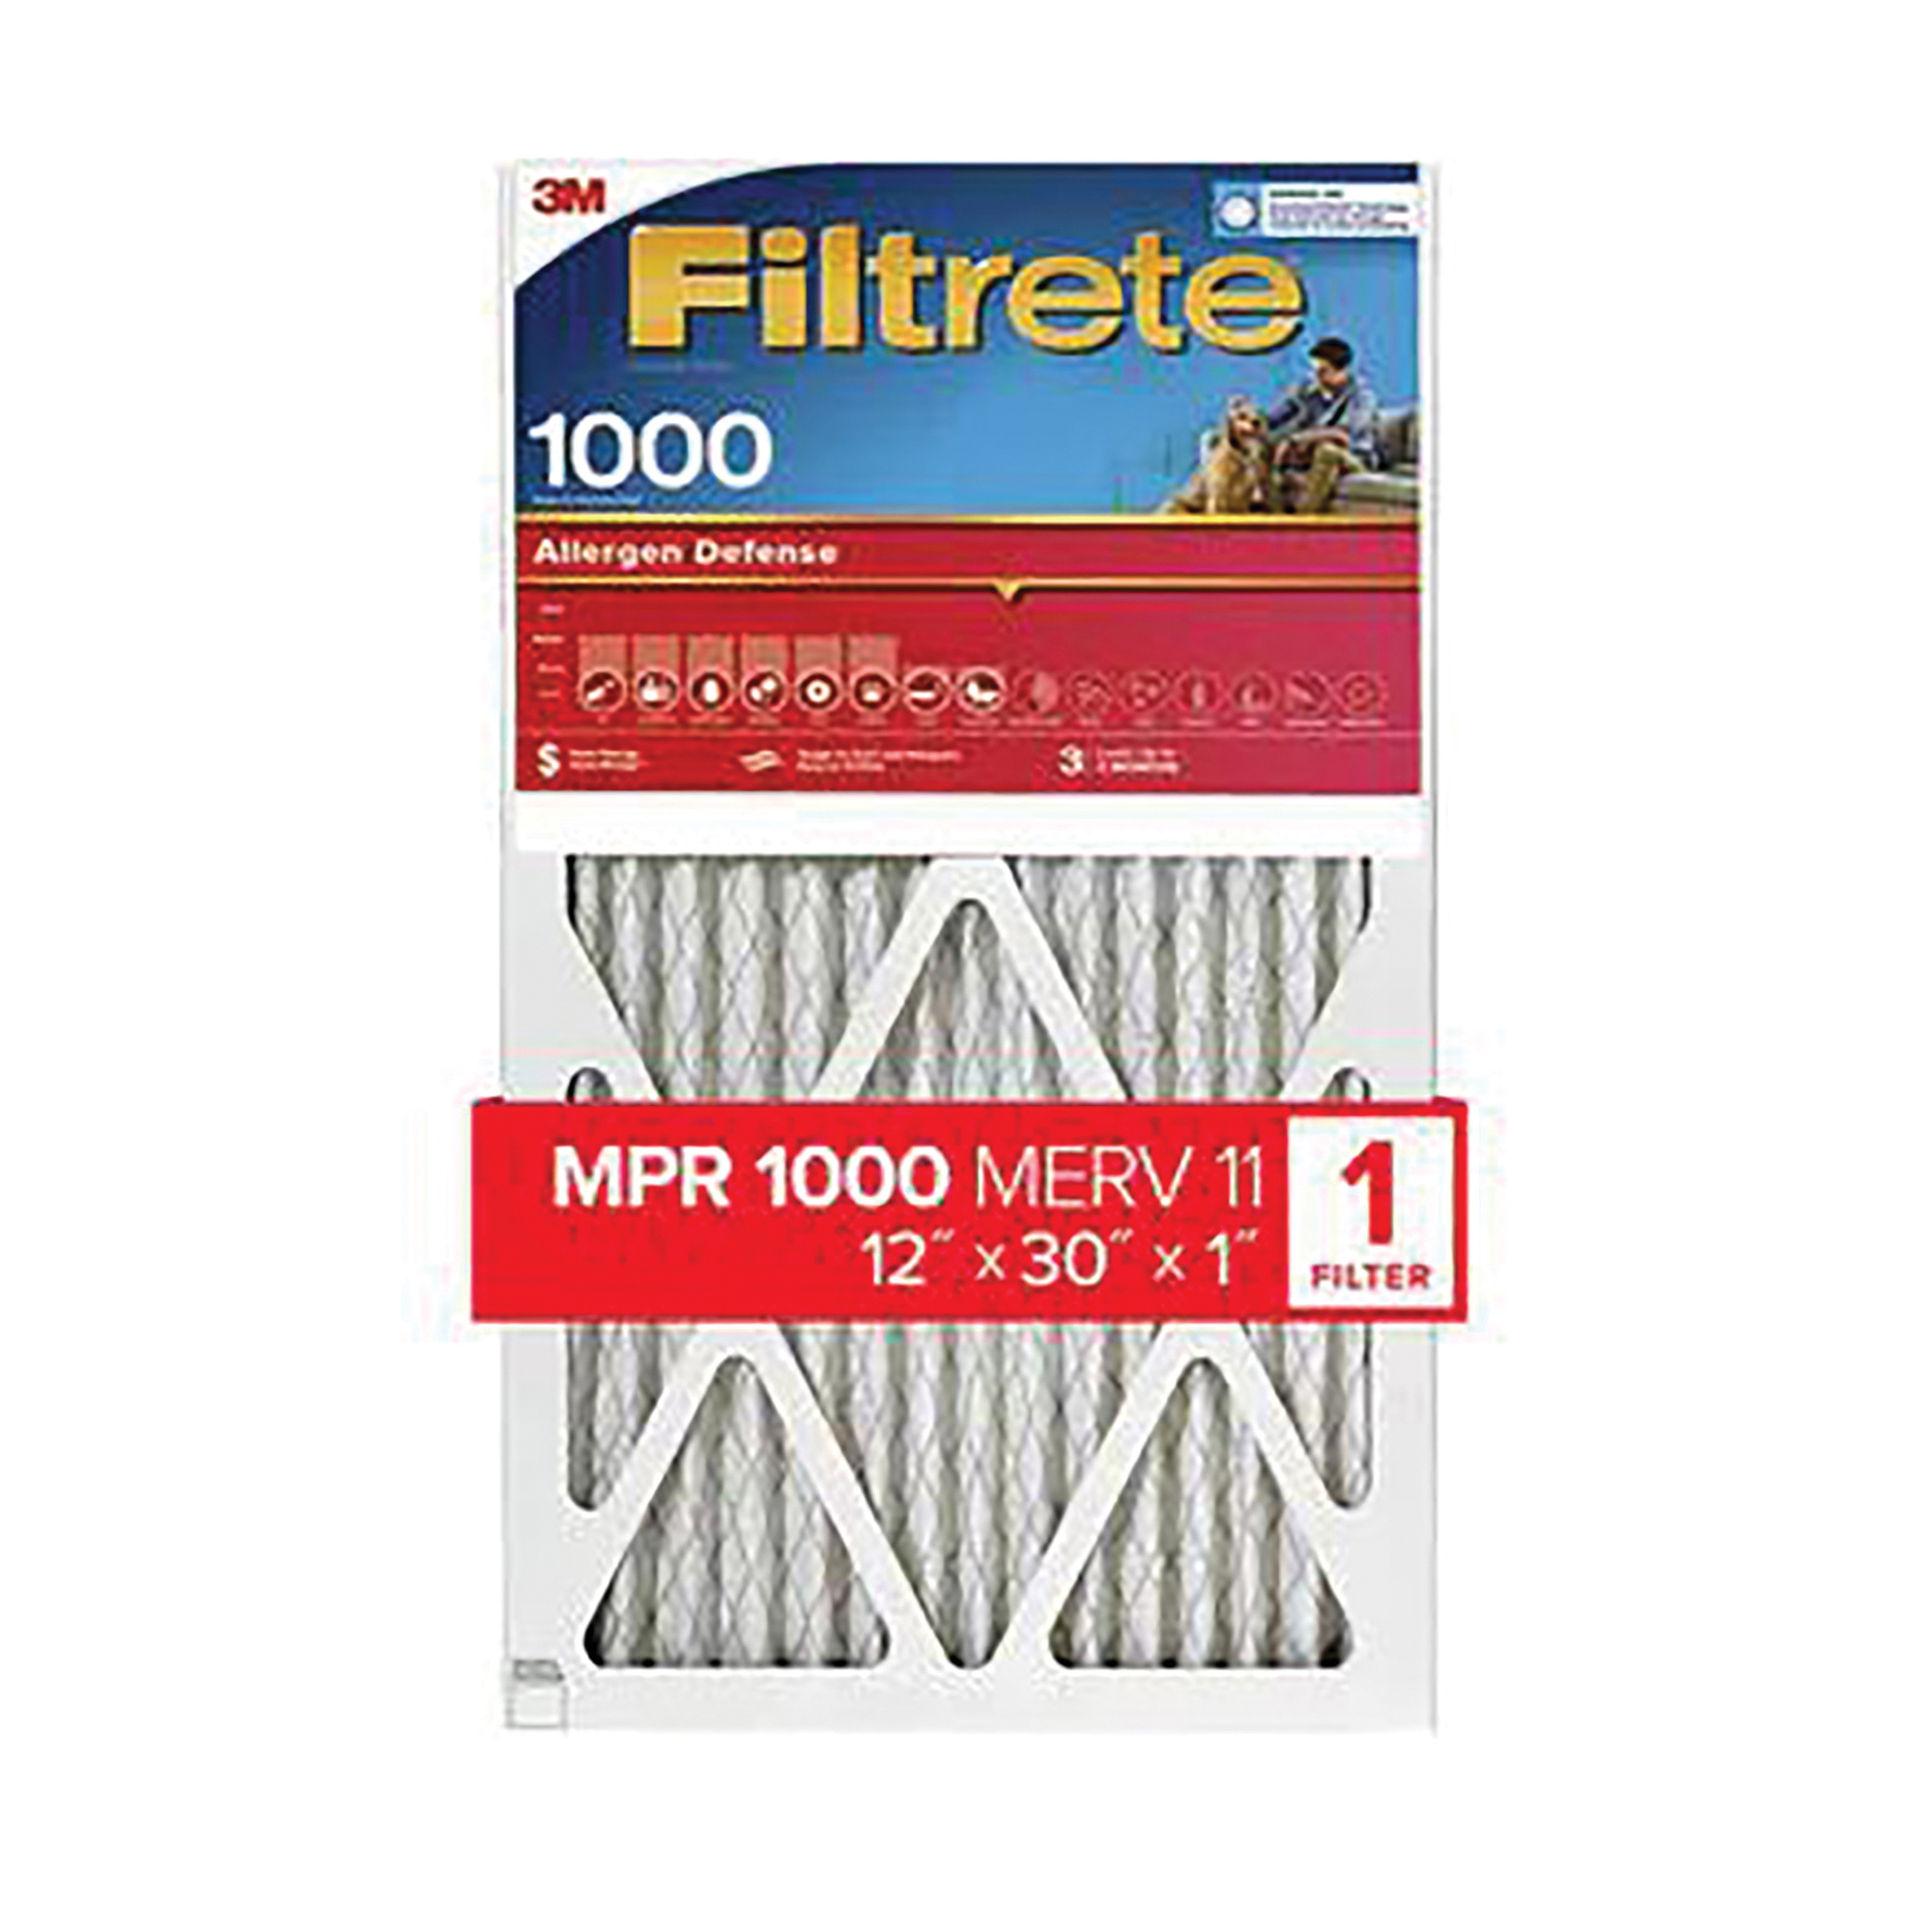 AL42-4 Air Filter, 30 x 12 x 1, 11 MERV, 1000 MPR, Polypropylene Frame